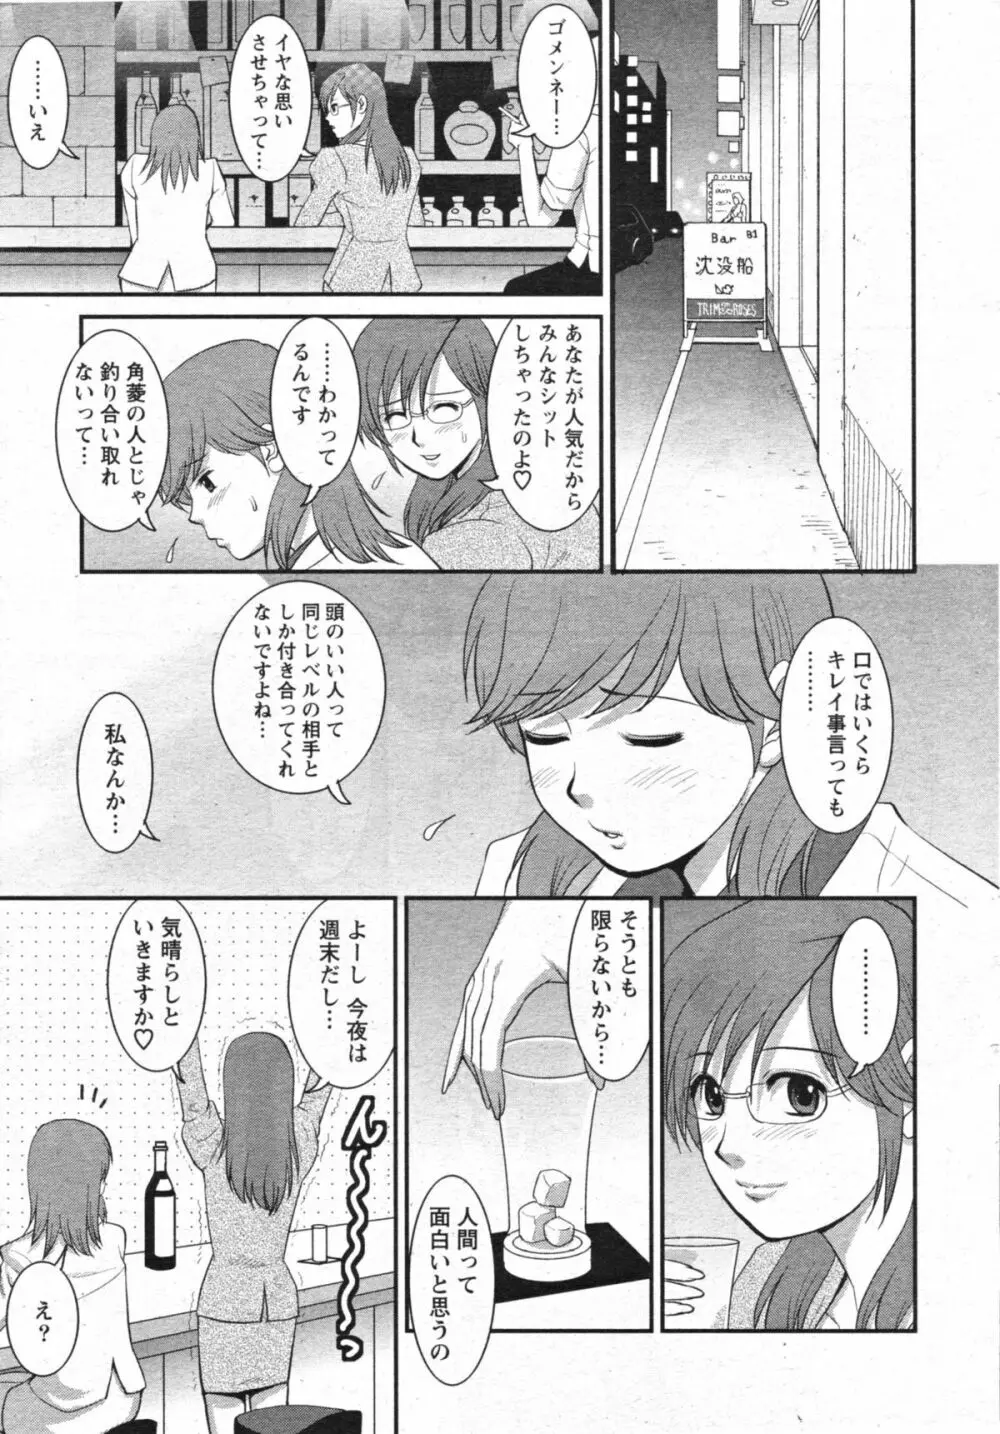 Haken no Muuko San 11 12ページ